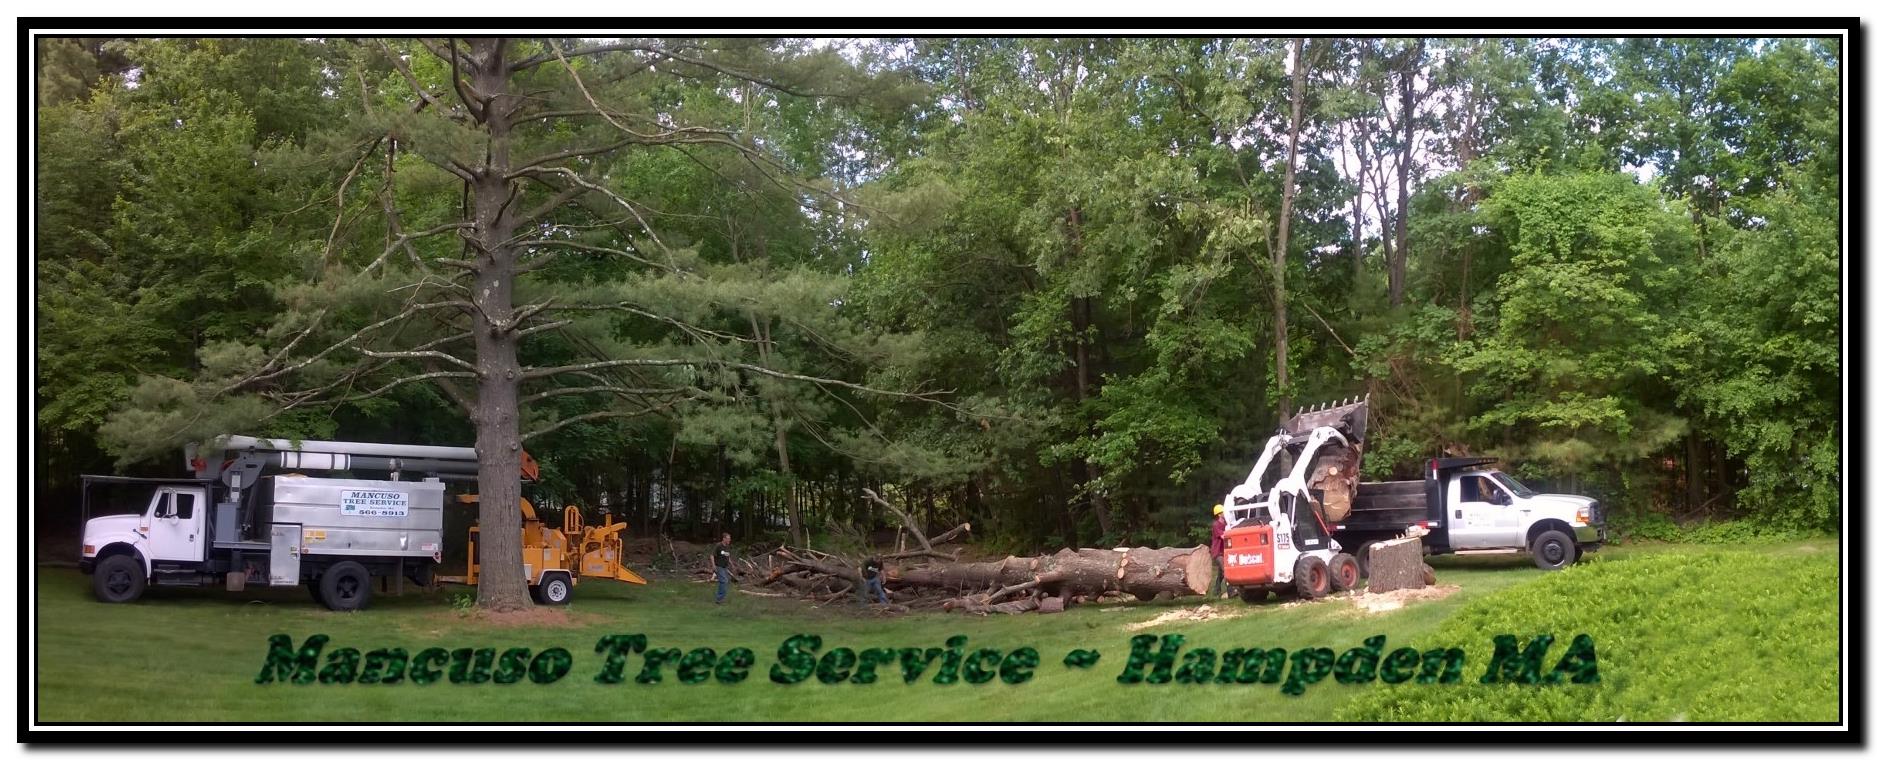 Mancuso Tree Service 131 Somers Rd, Hampden Massachusetts 01036